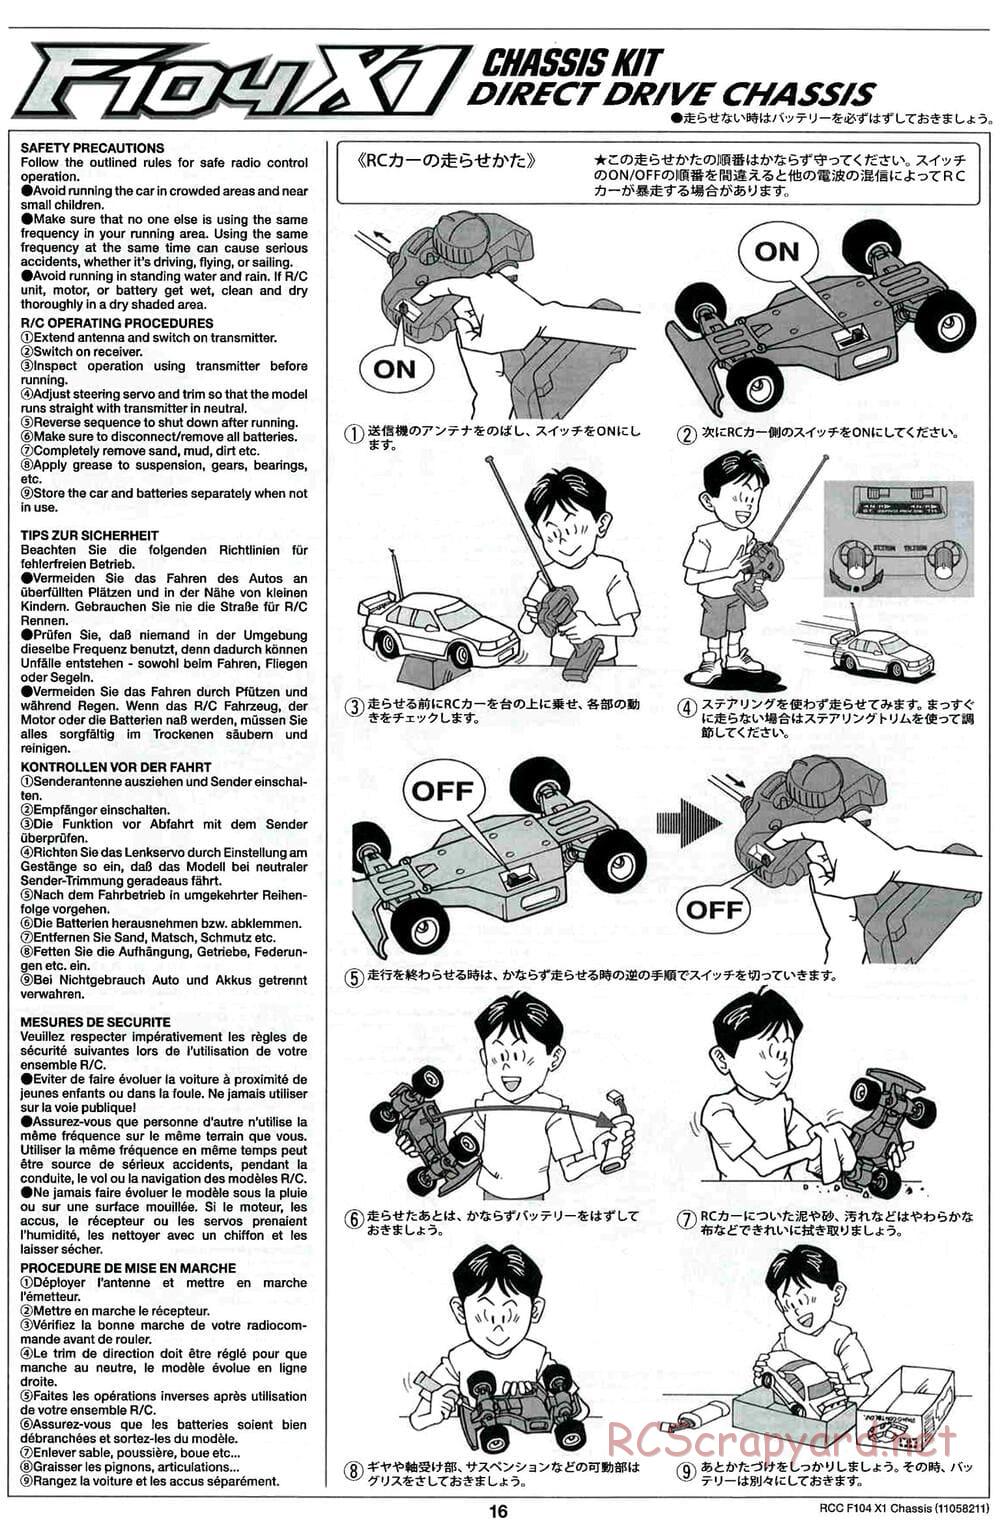 Tamiya - F104X1 Chassis - Manual - Page 16